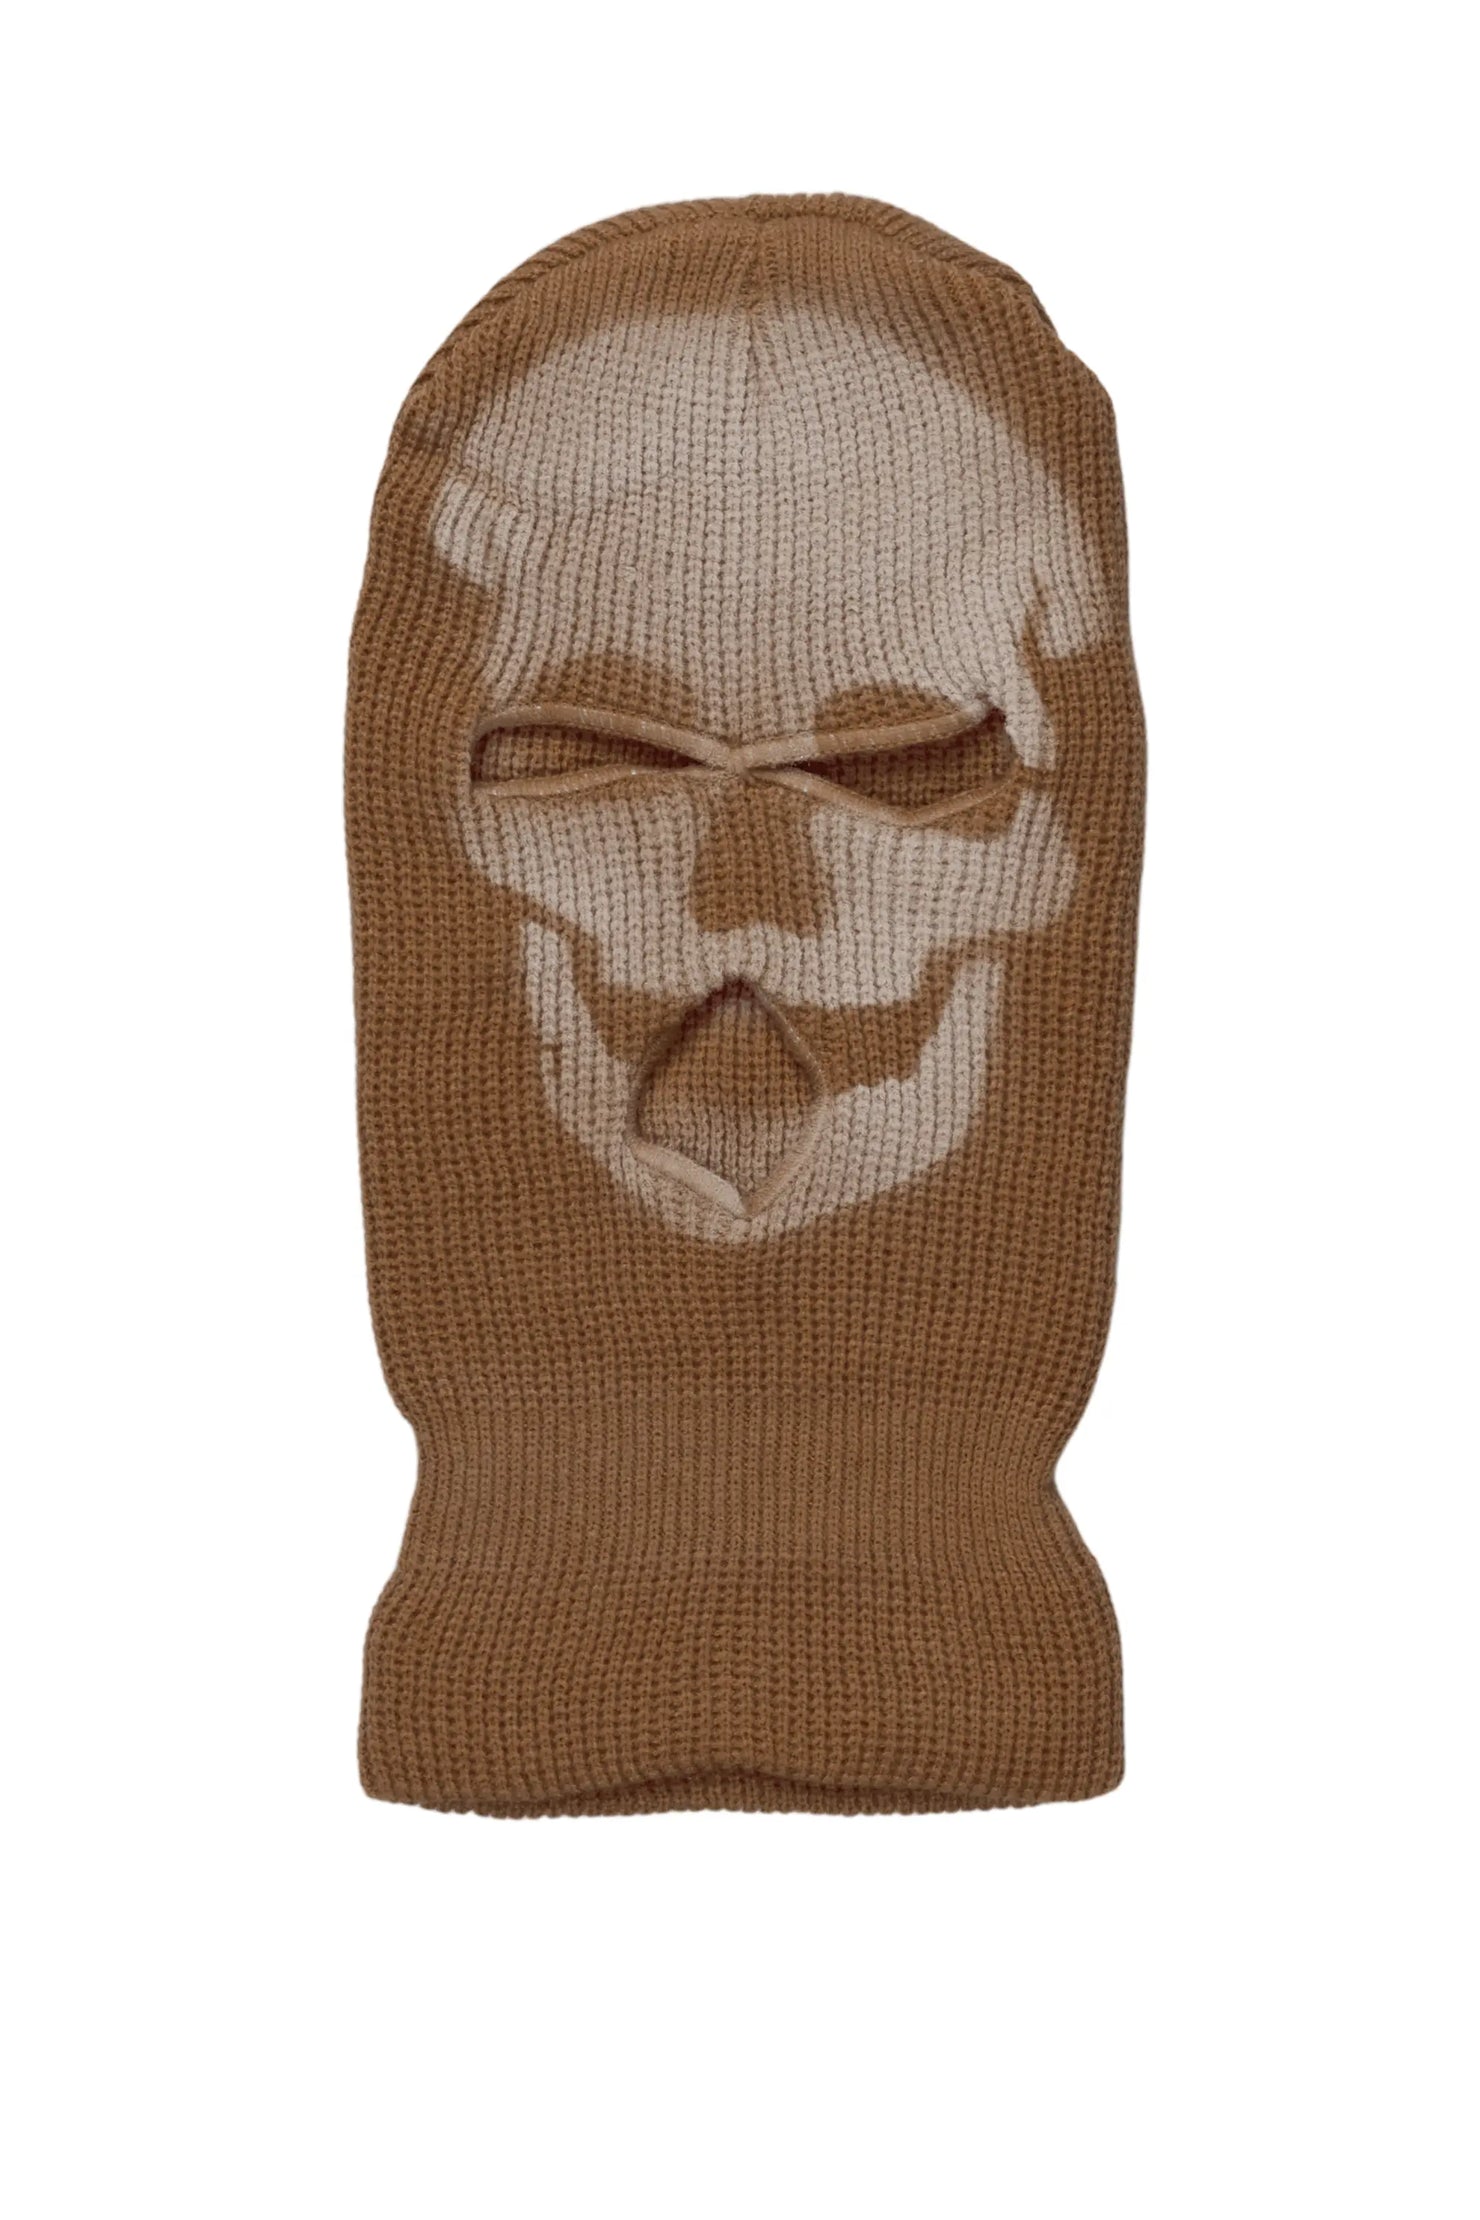 Batu Brown Graphic Ski Mask